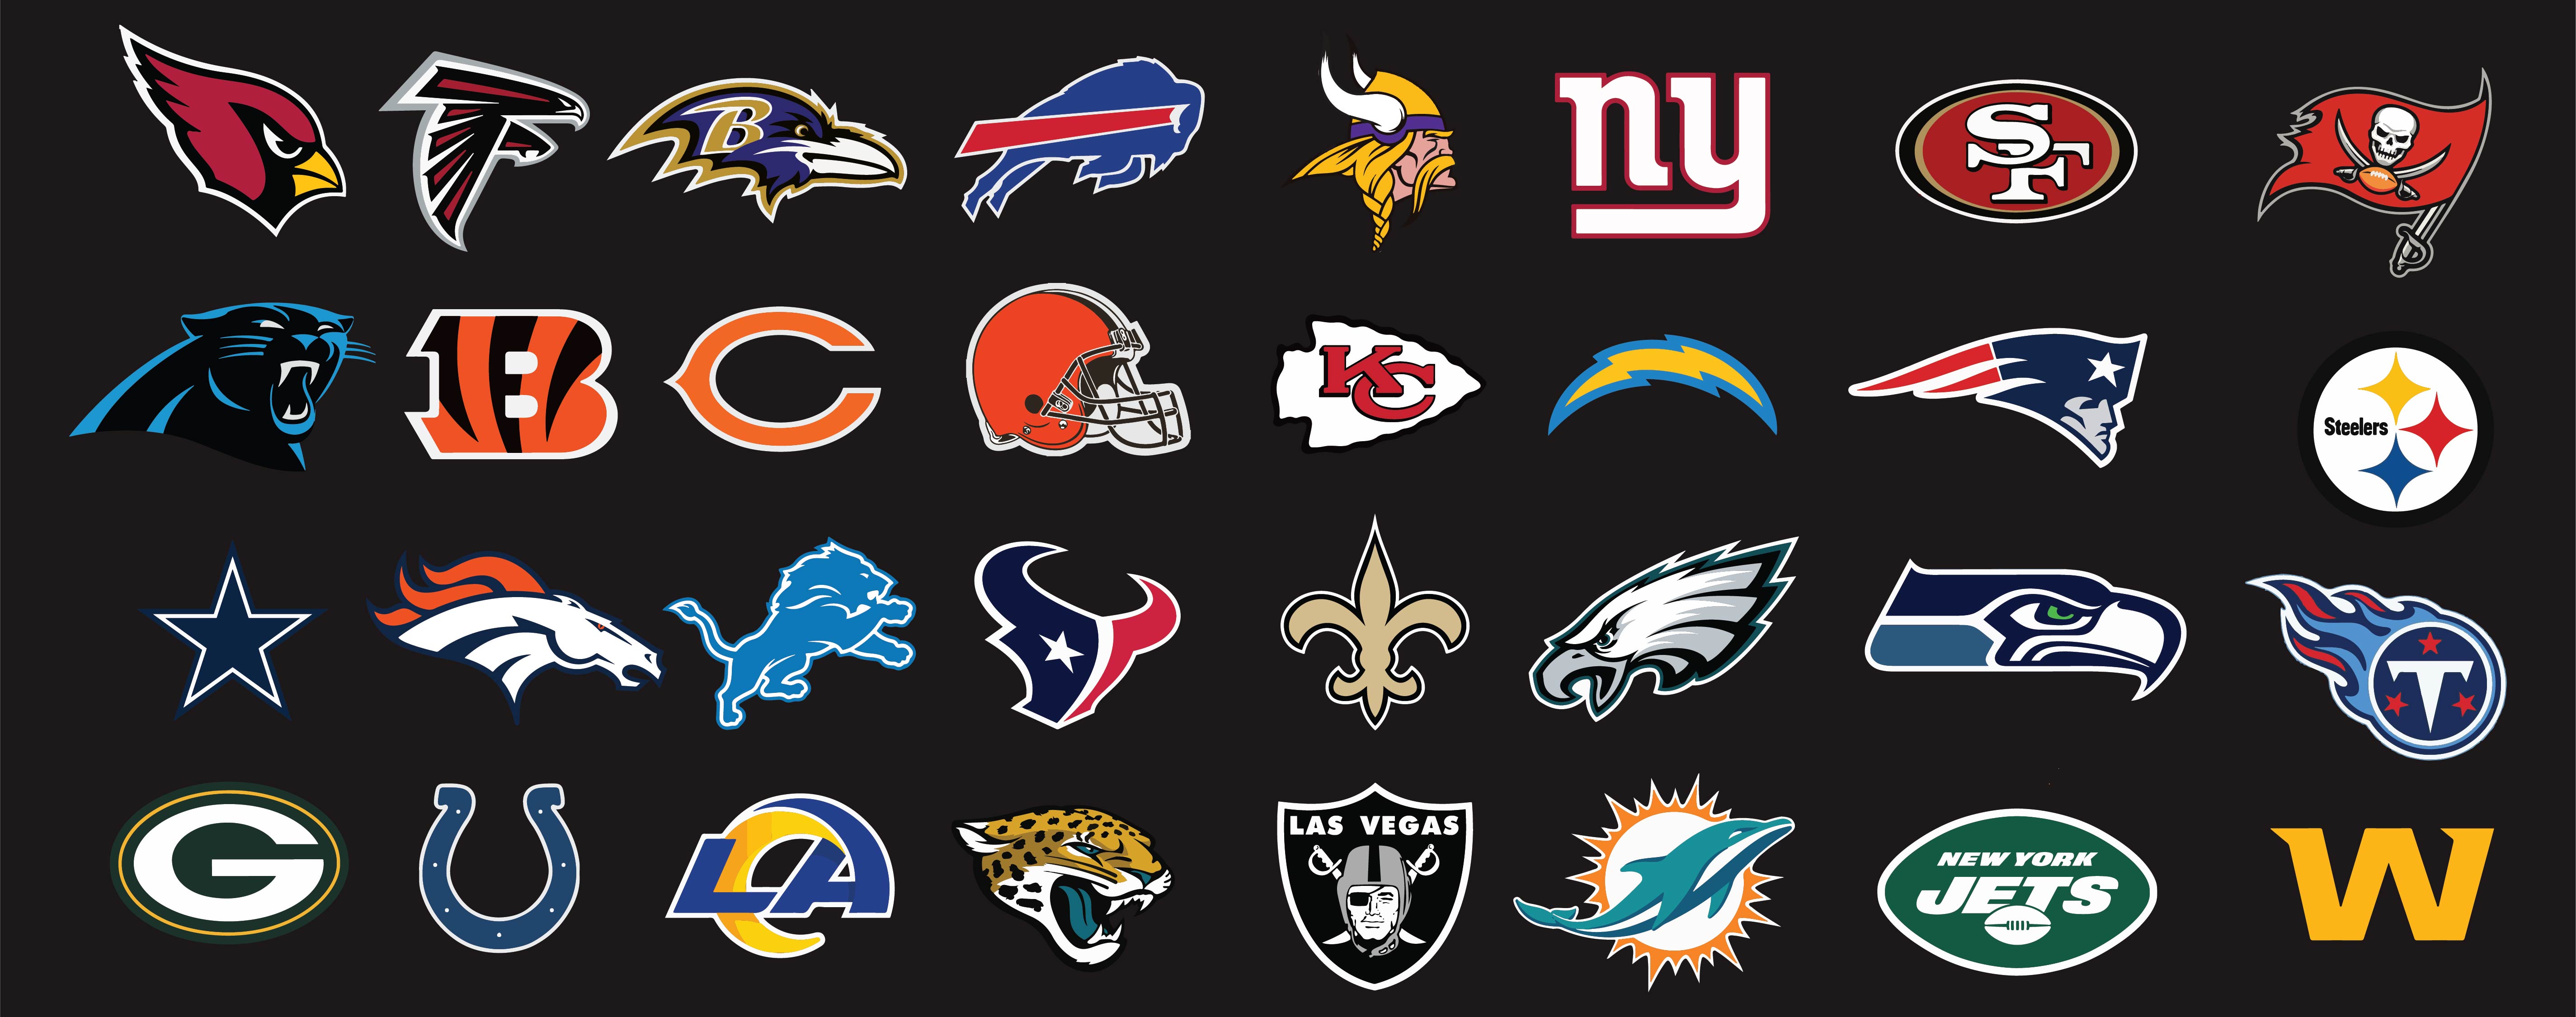 7 Best Images of NFL Football Logos Printable NFL Football Team Logo